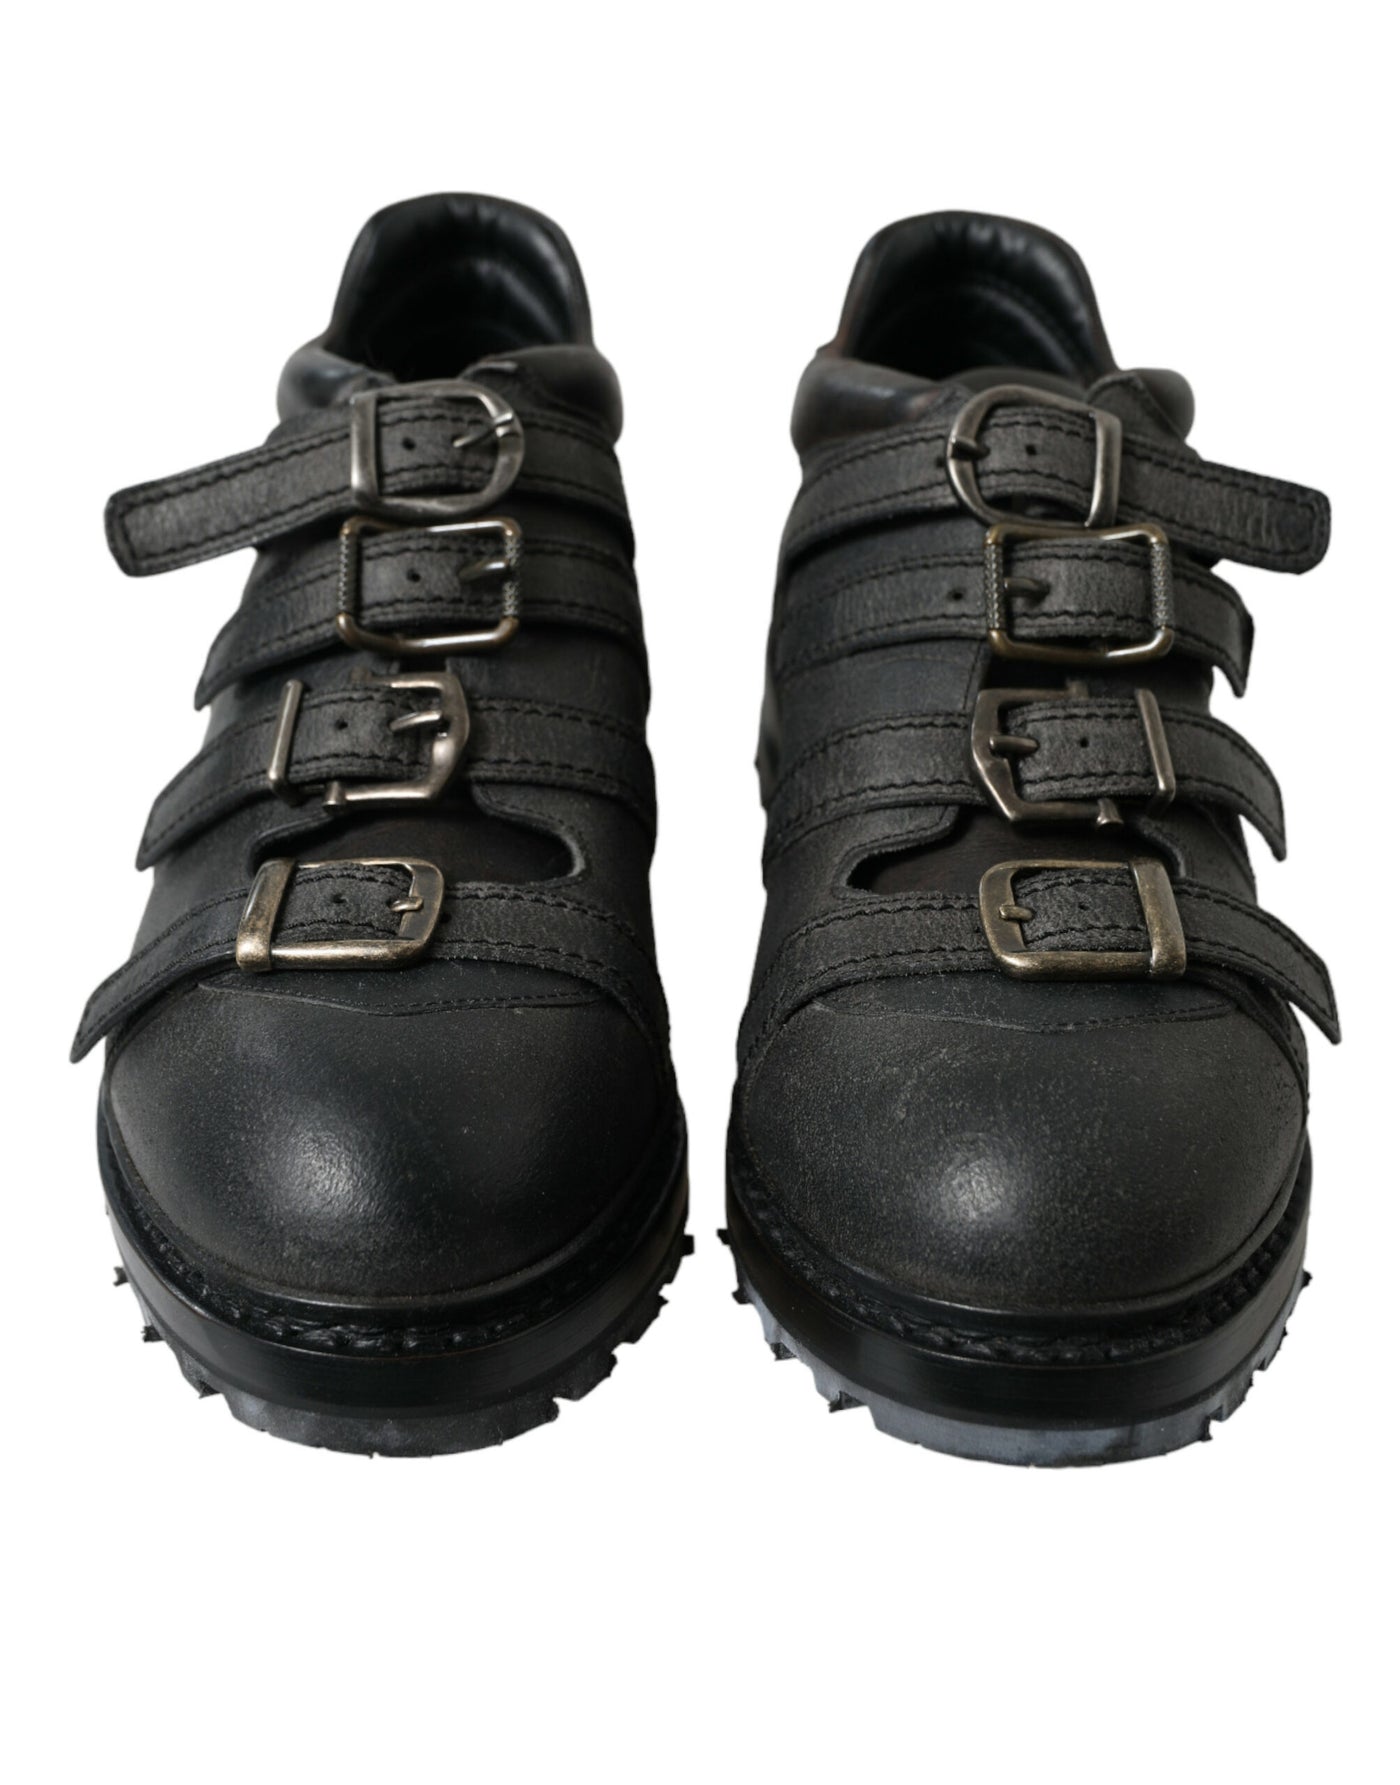 Dolce & Gabbana Black Leather Strap Men Ankle Boots Shoes